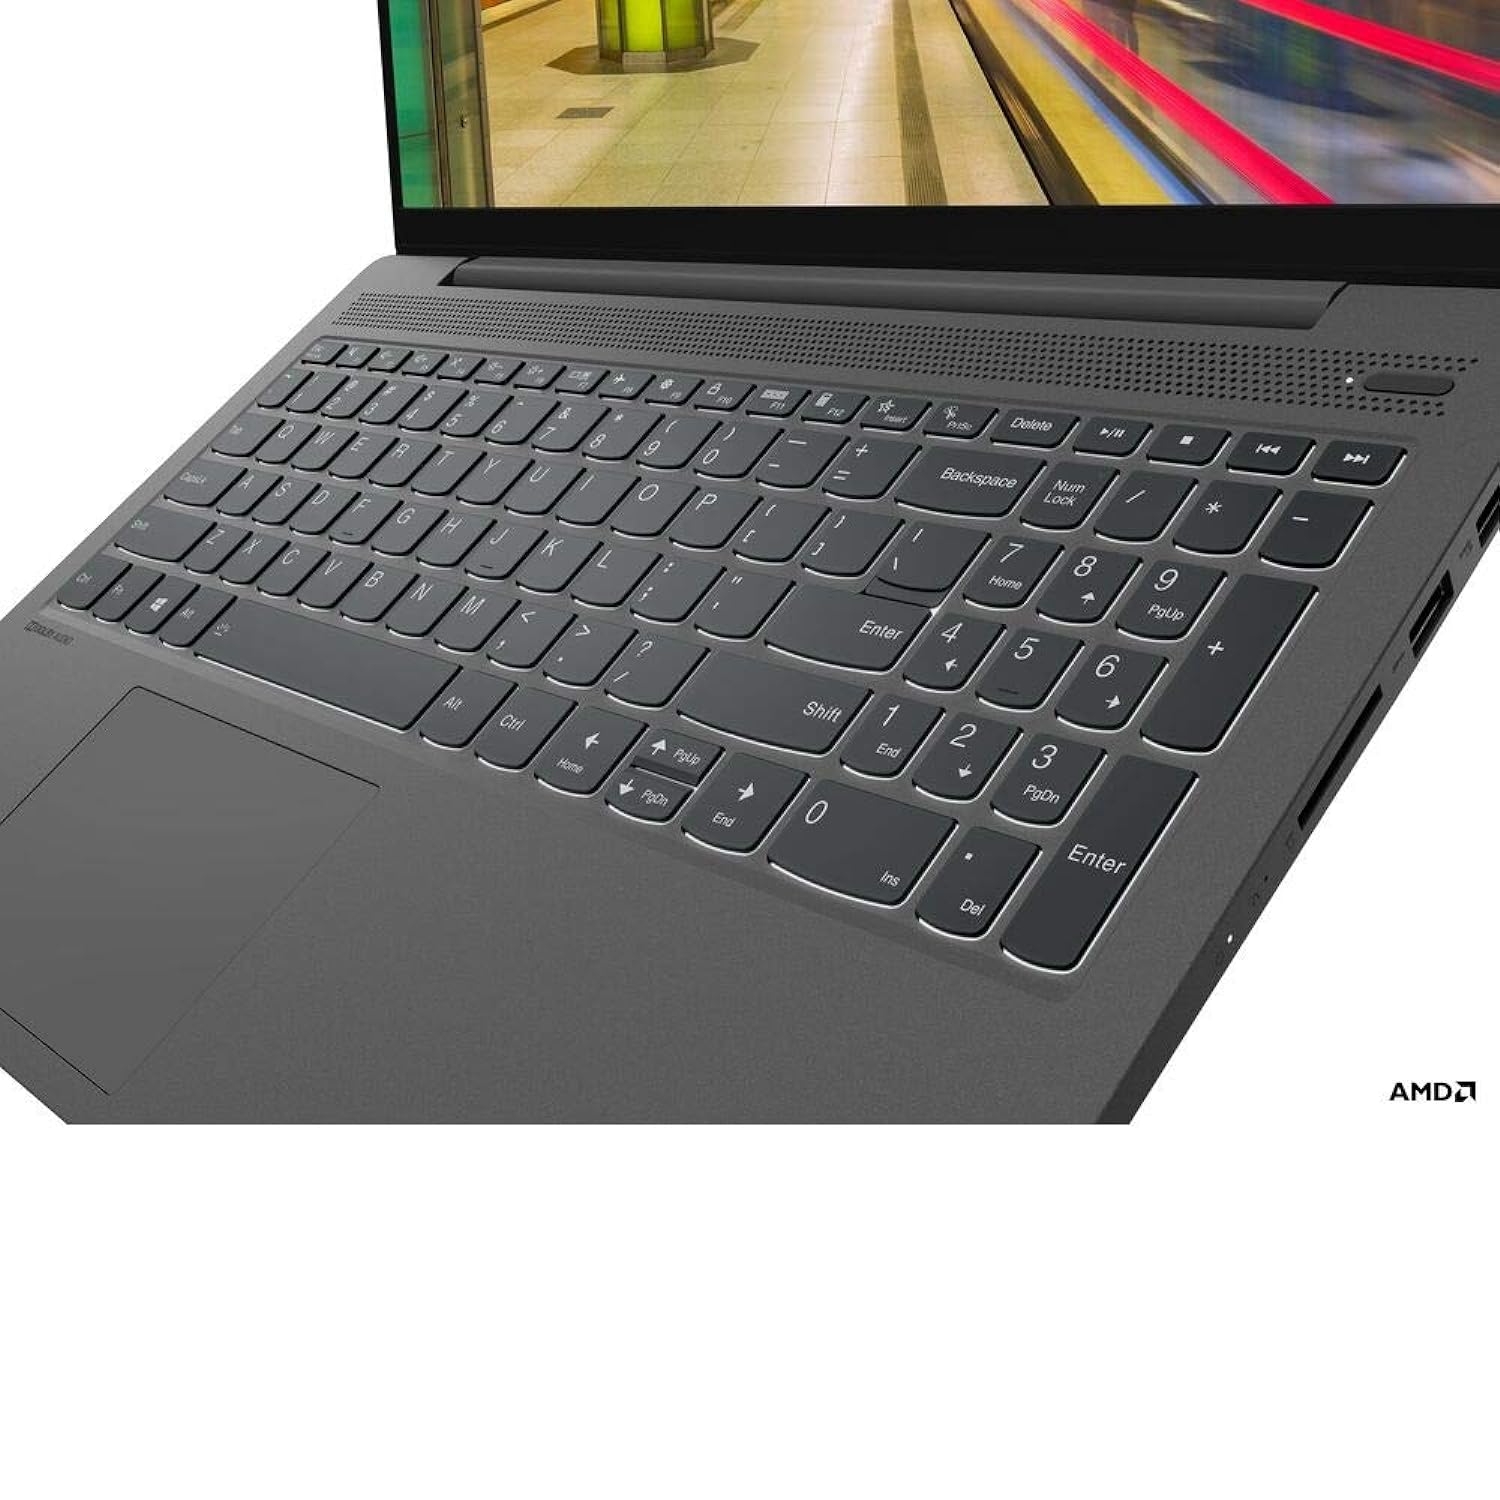 Lenovo IdeaPad 5 15.6" Laptop Ryzen 7-4700U 16GB RAM 512GB SSD Graphite Grey - AMD Ryzen 7-4700U Octa-core - 1920 x 1080 Full…